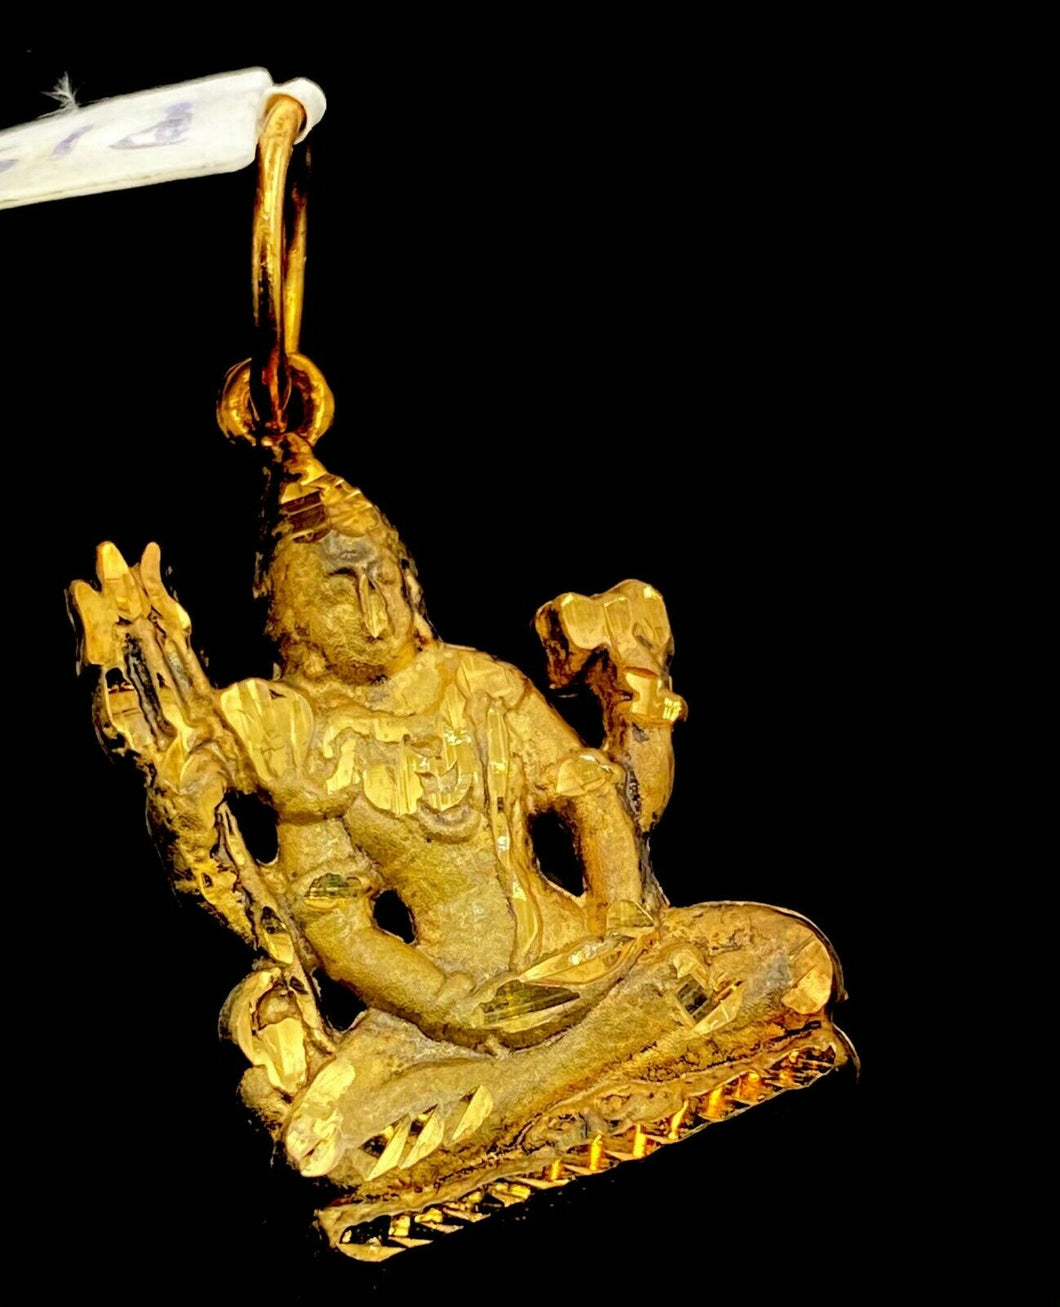 22k Solid Gold ELEGANT Simple Diamond Cut Religious Lord Shiva Pendant P1522 - Royal Dubai Jewellers